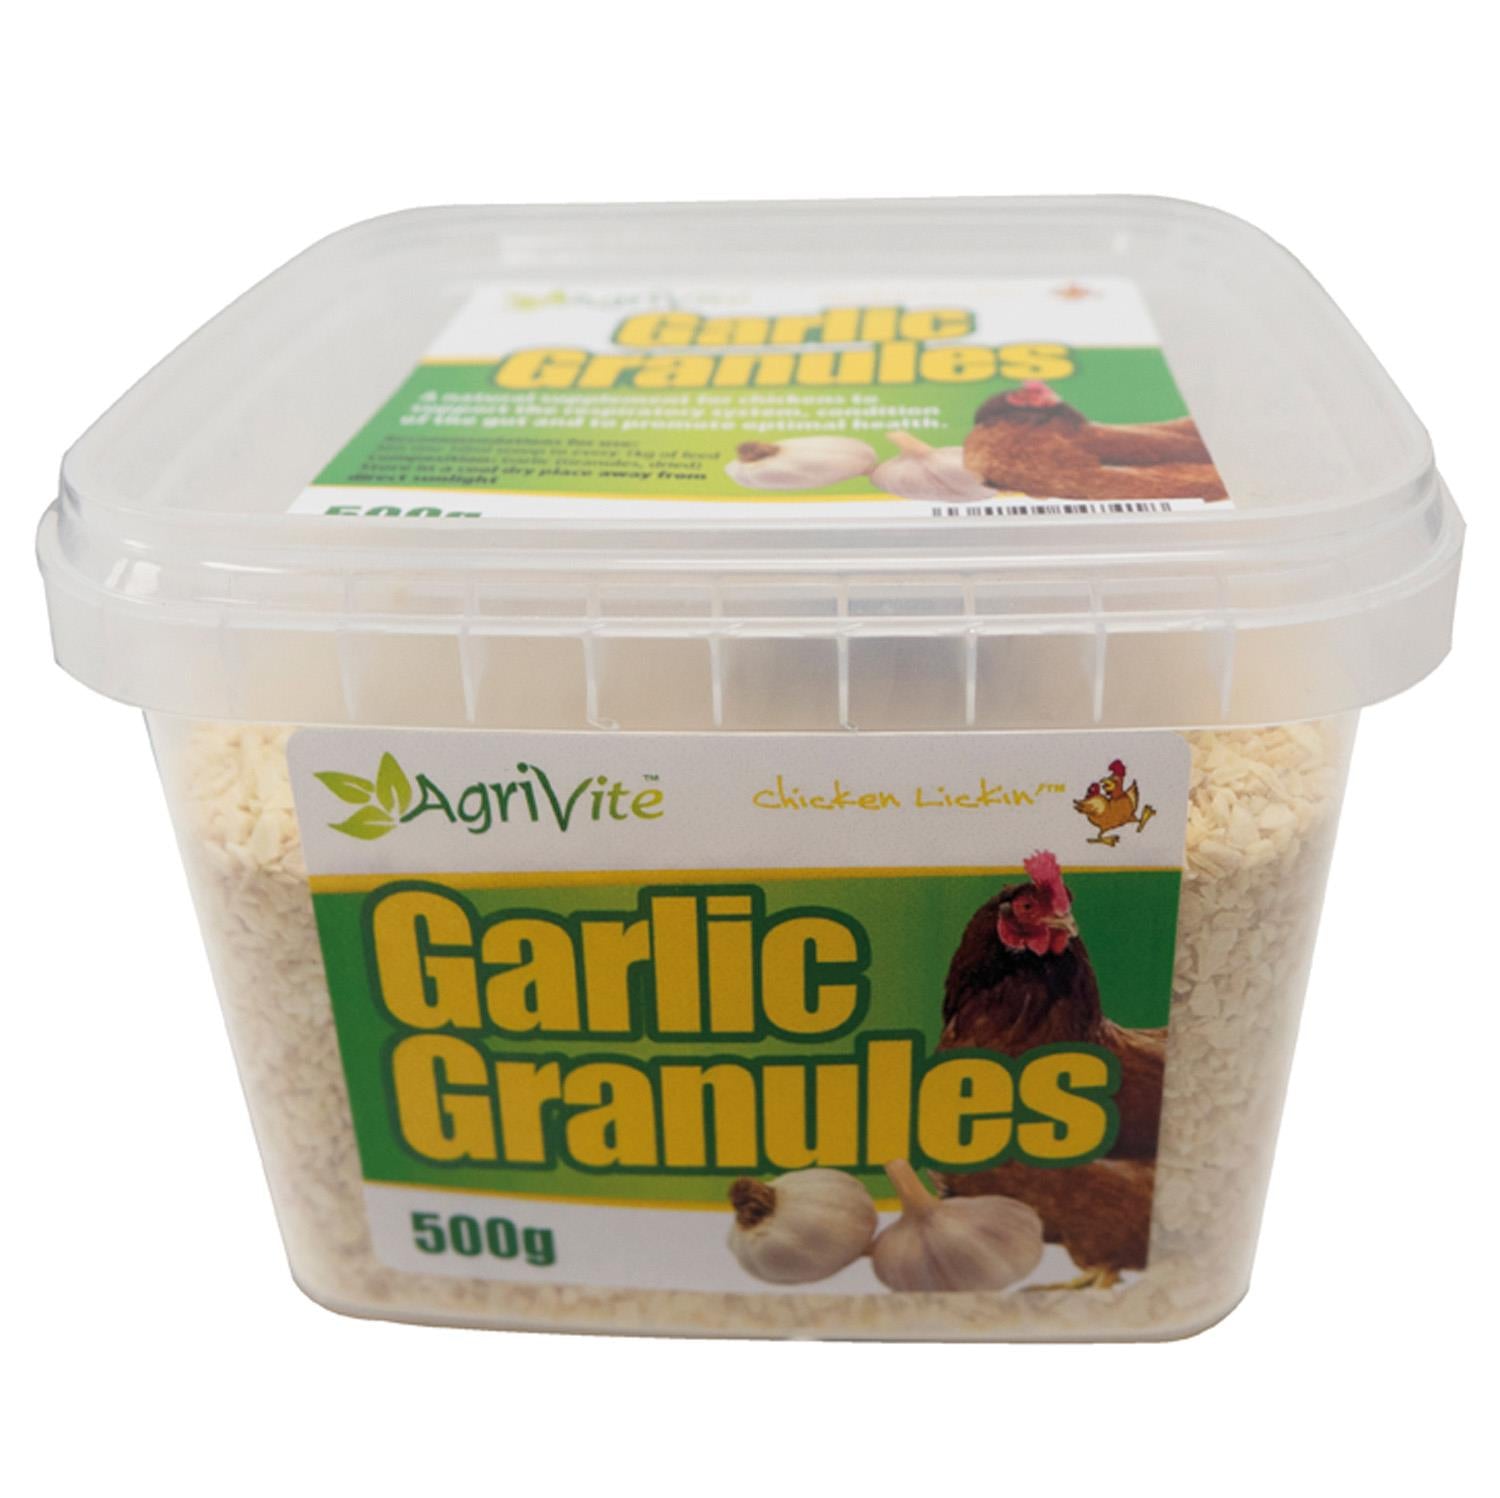 Agrivite Garlic Granules - Just Horse Riders